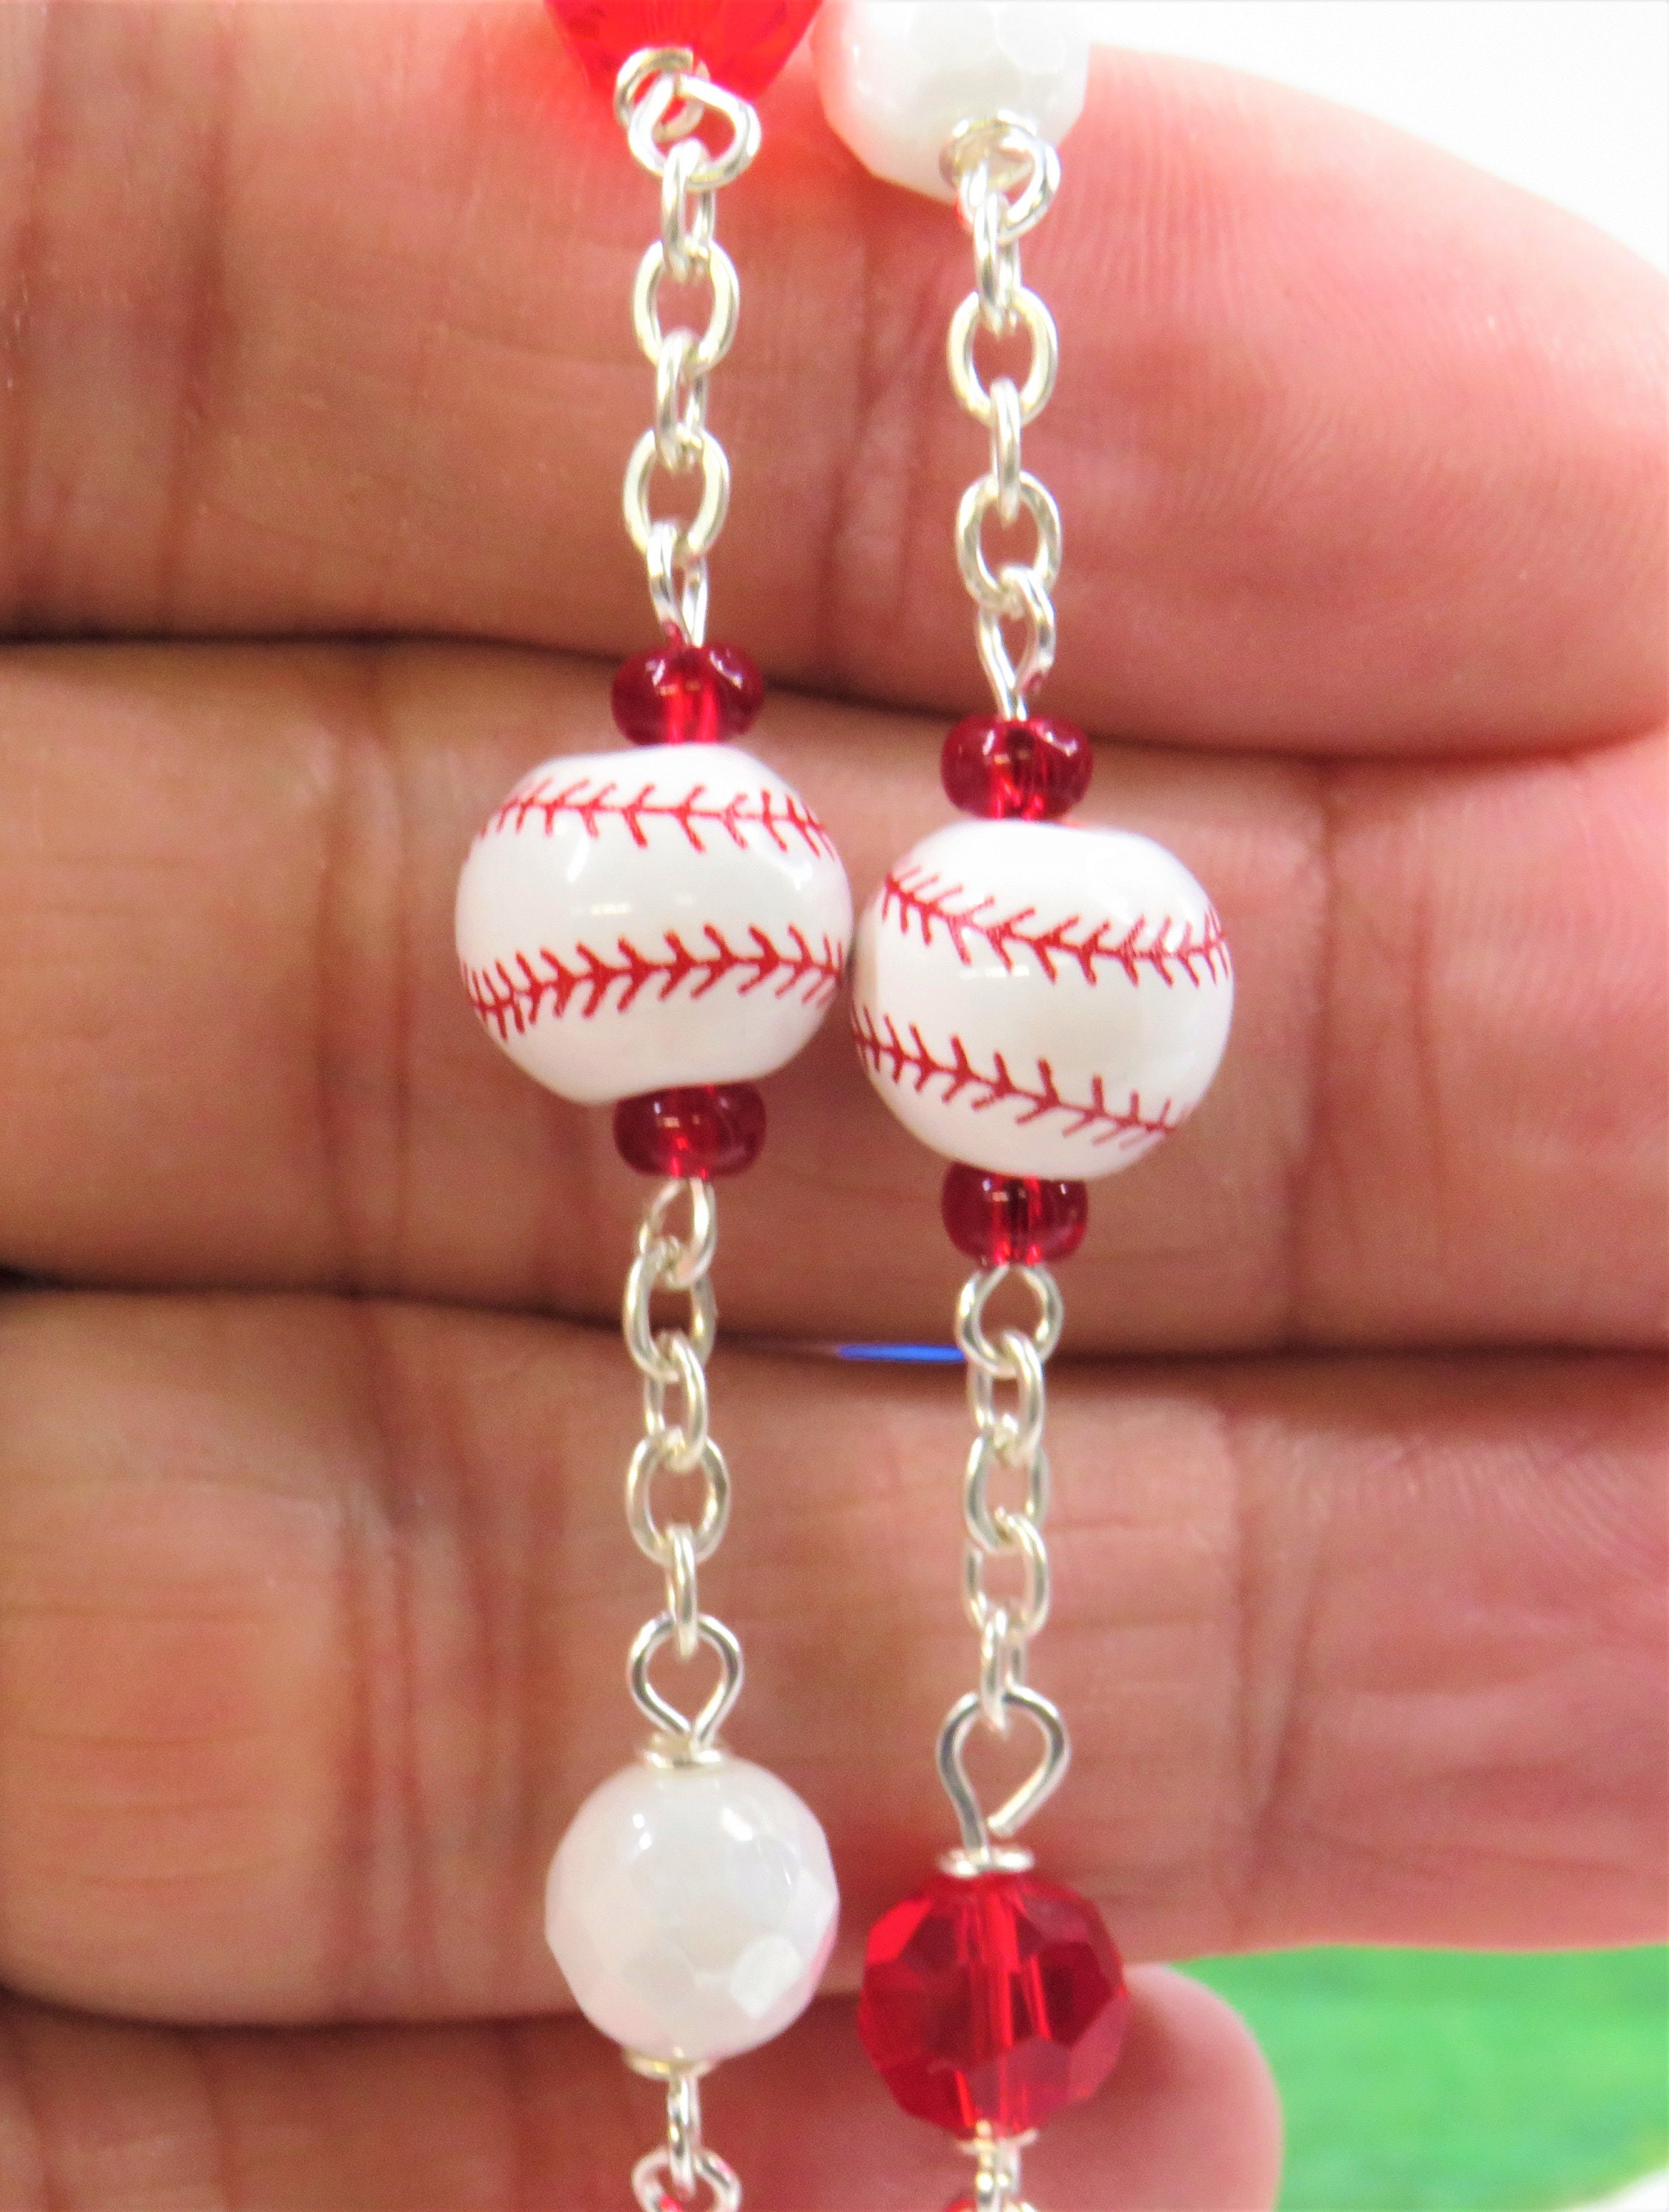 Red & White Ceramic Heart Beads, 16mm by Bead Landing™